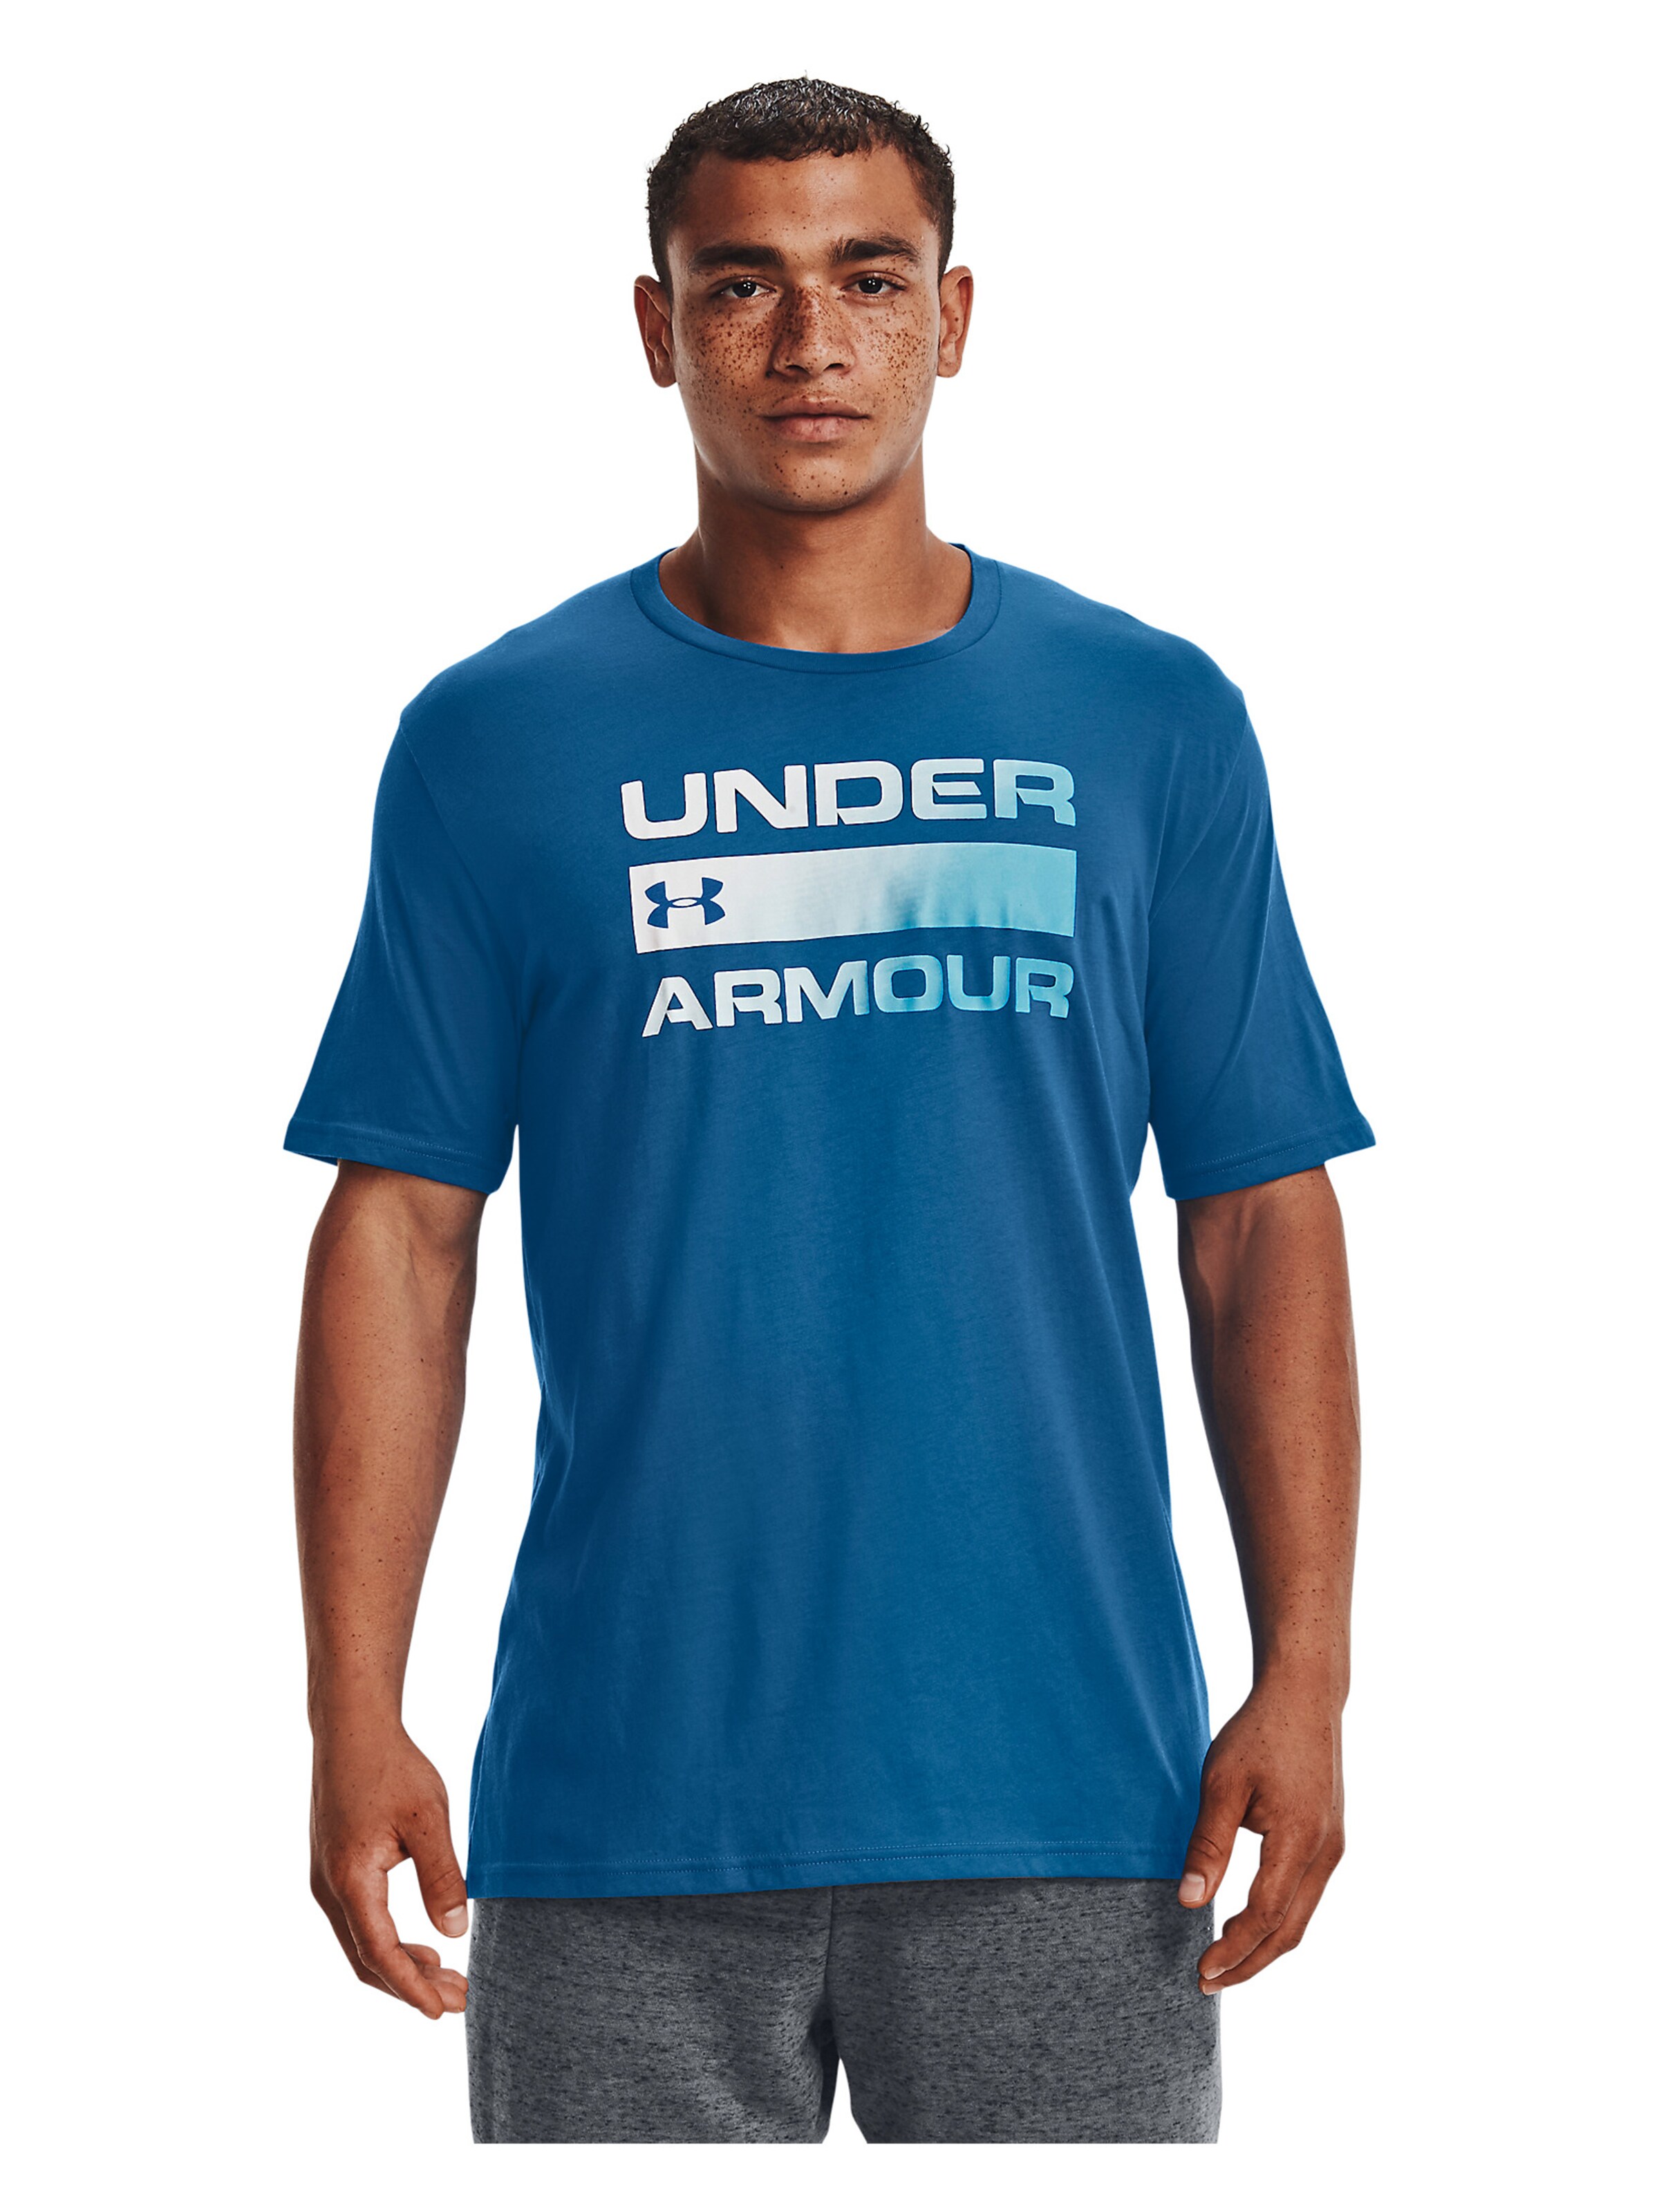 Männer Sportarten UNDER ARMOUR Funktionsshirt in Blau - LE69111